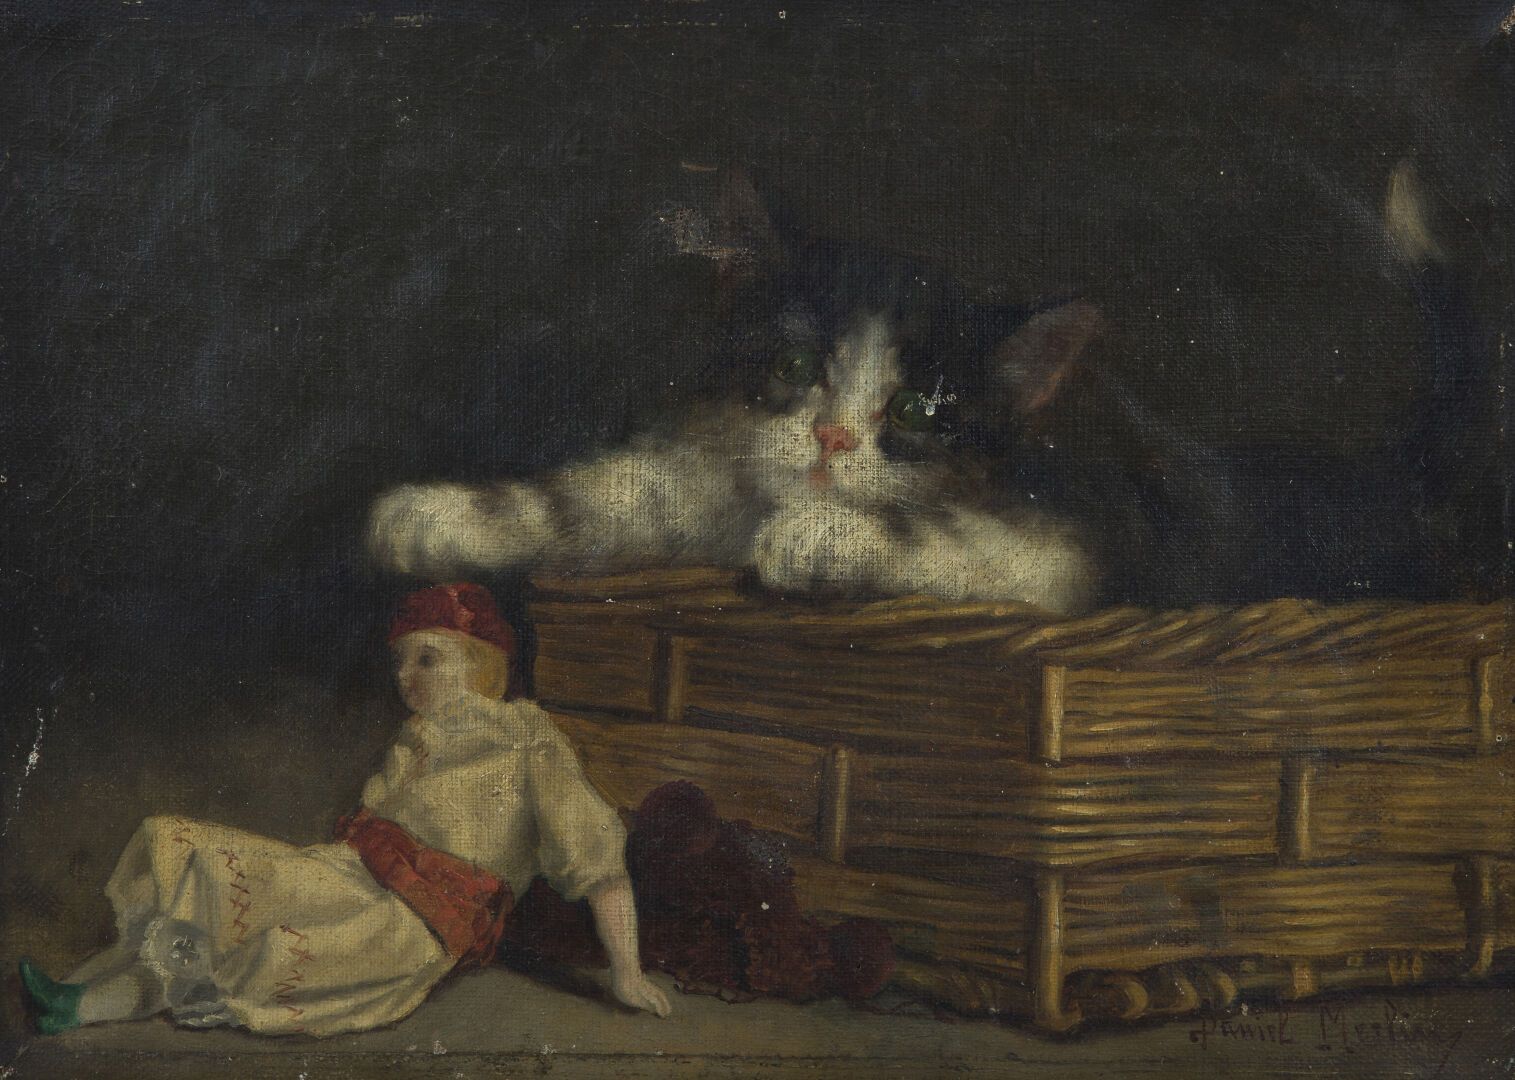 Null 丹尼尔-梅林(1861-1933)
篮子里的小猫和娃娃
布面油画
右下方有签名
背面有纸
(意外事件)
24 x 33 cm